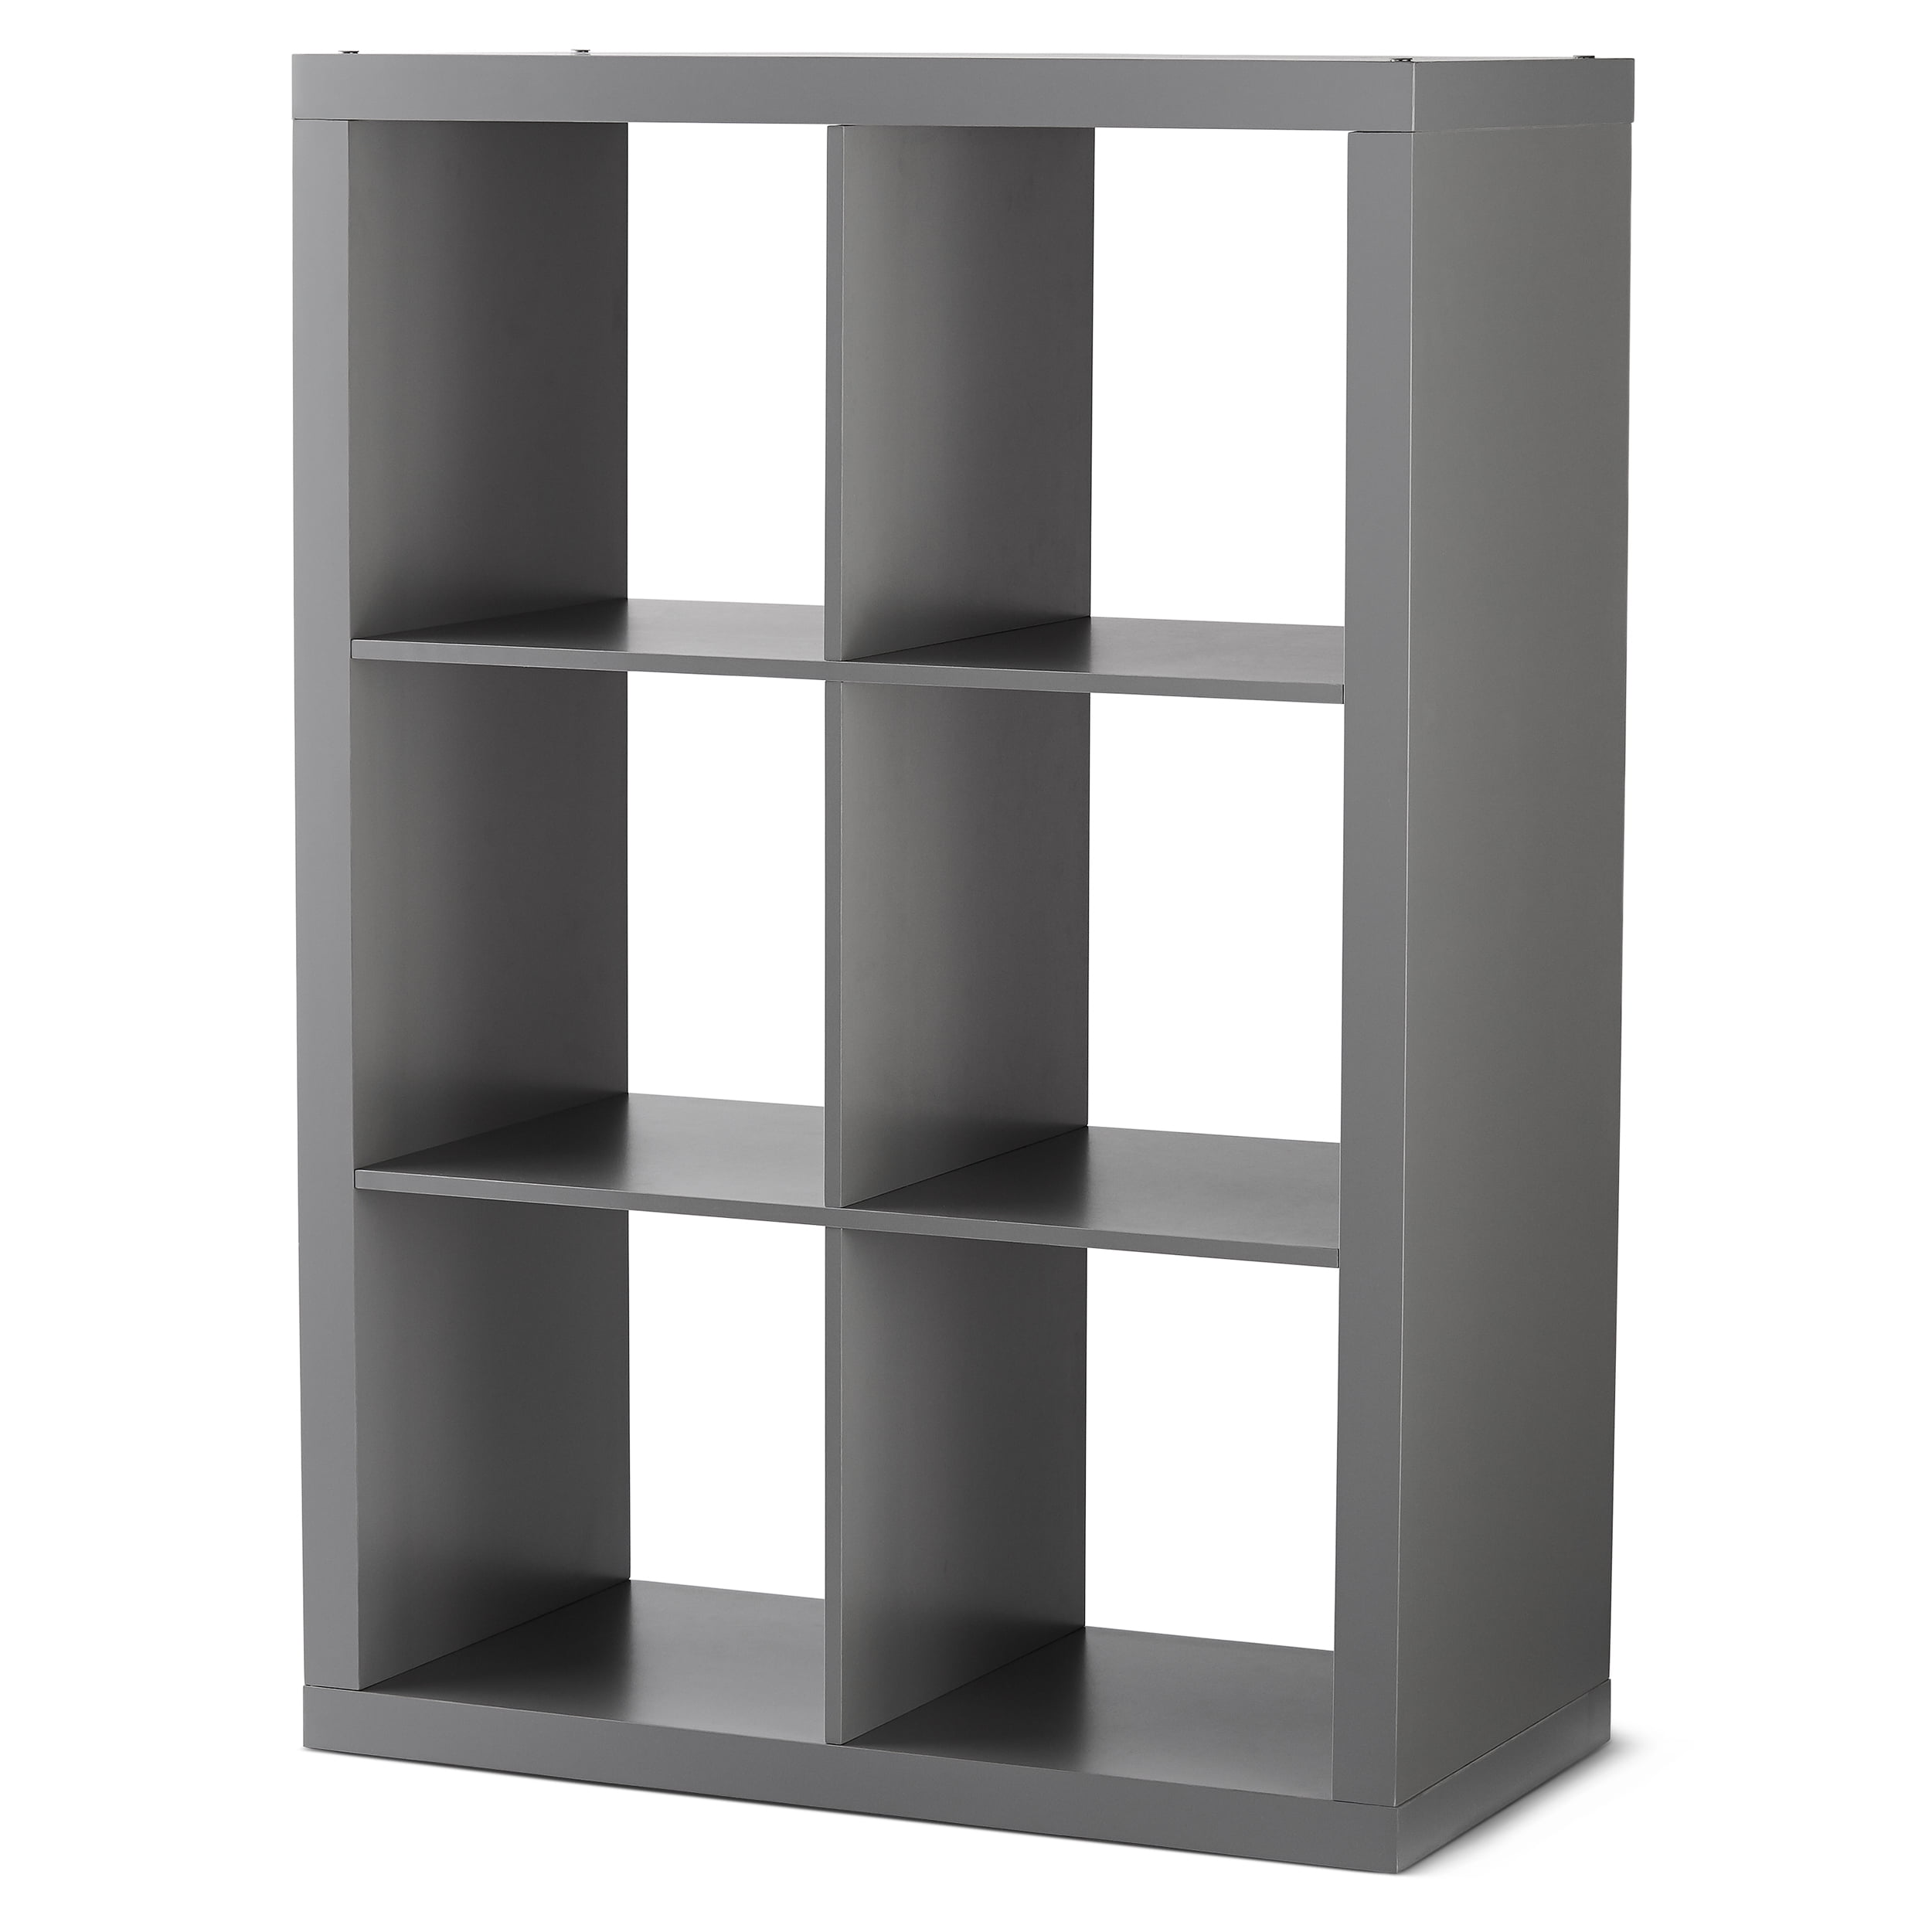 13 6 Cube Organizer Shelf Weathered Gray Threshold 